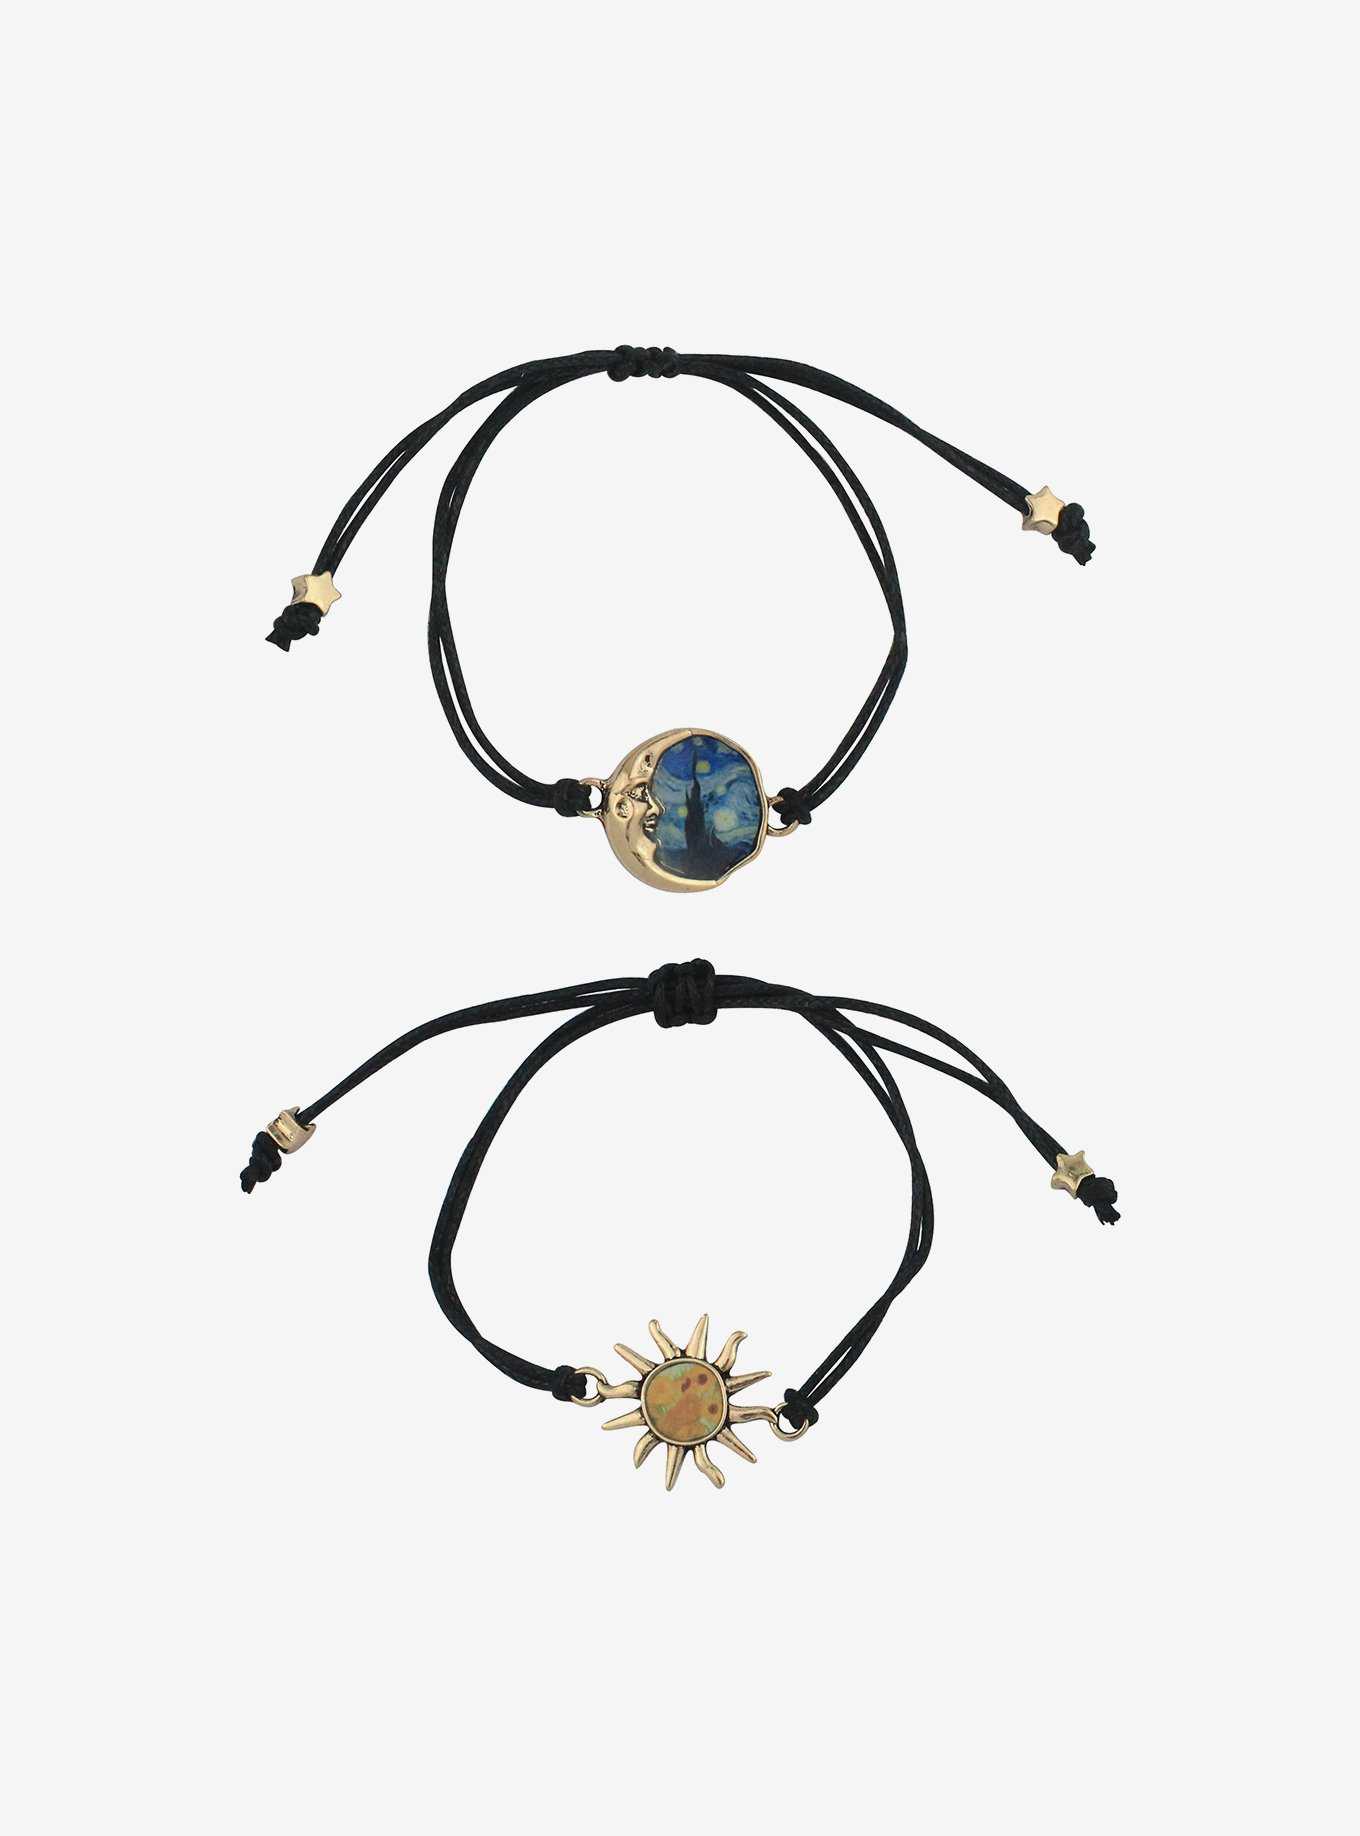 Thorn & Fable Sun And Moon Best Friend Cord Bracelet Set, , hi-res